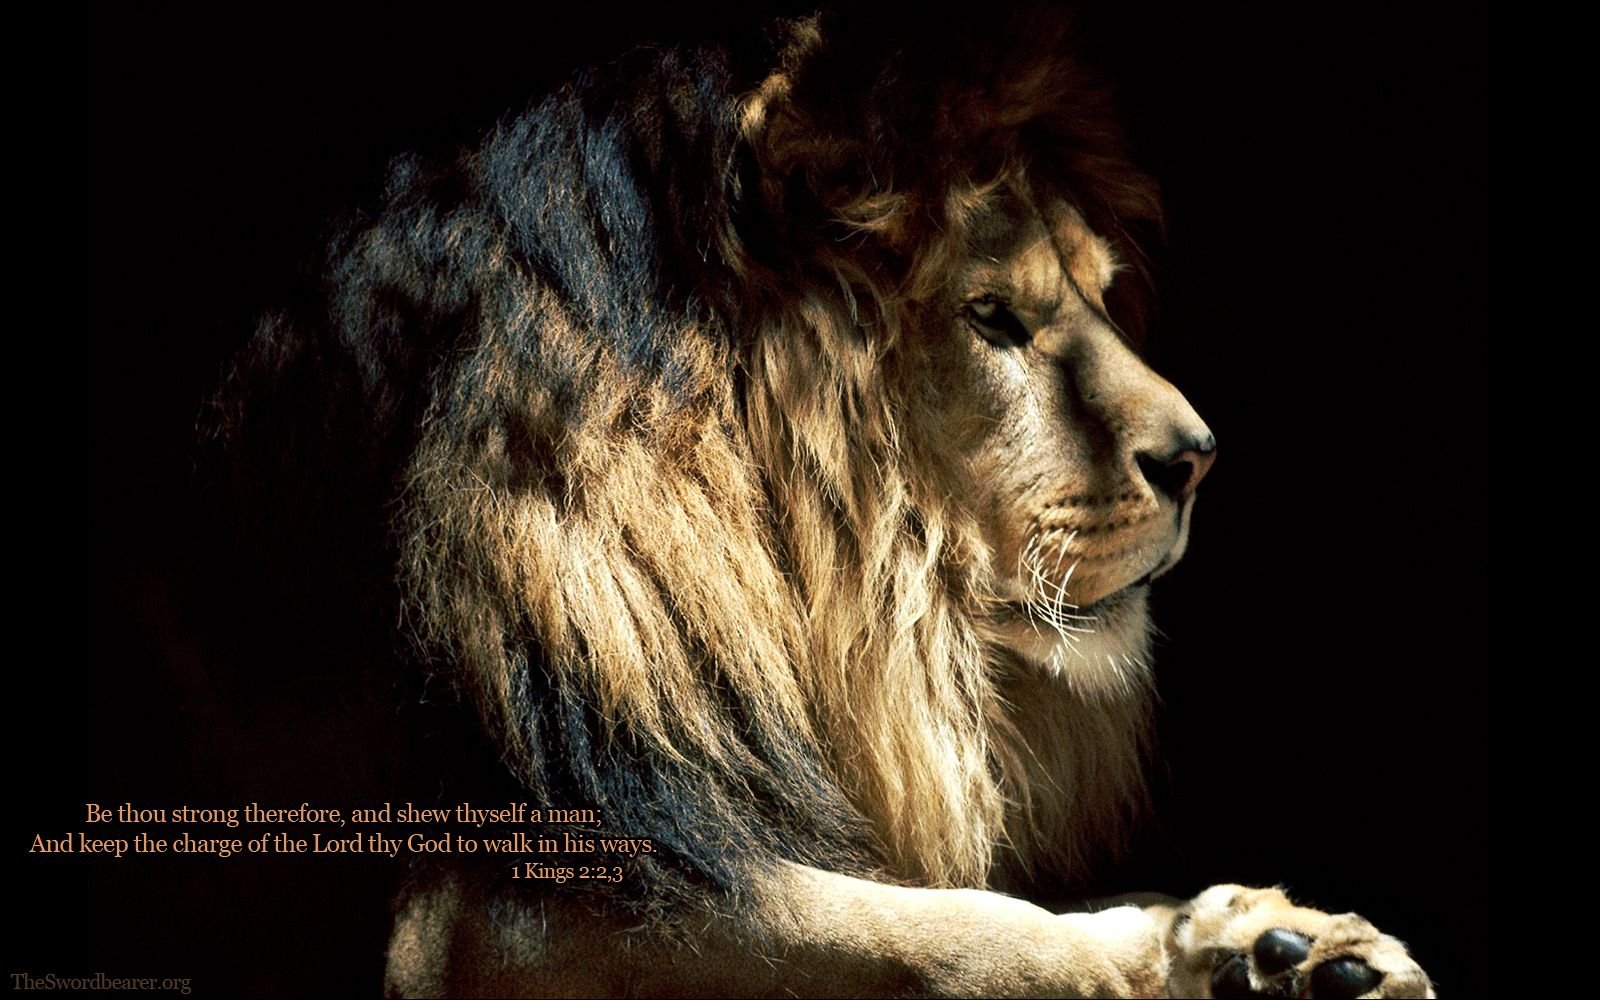 Lion of judah 1080P 2K 4K 5K HD wallpapers free download  Wallpaper  Flare